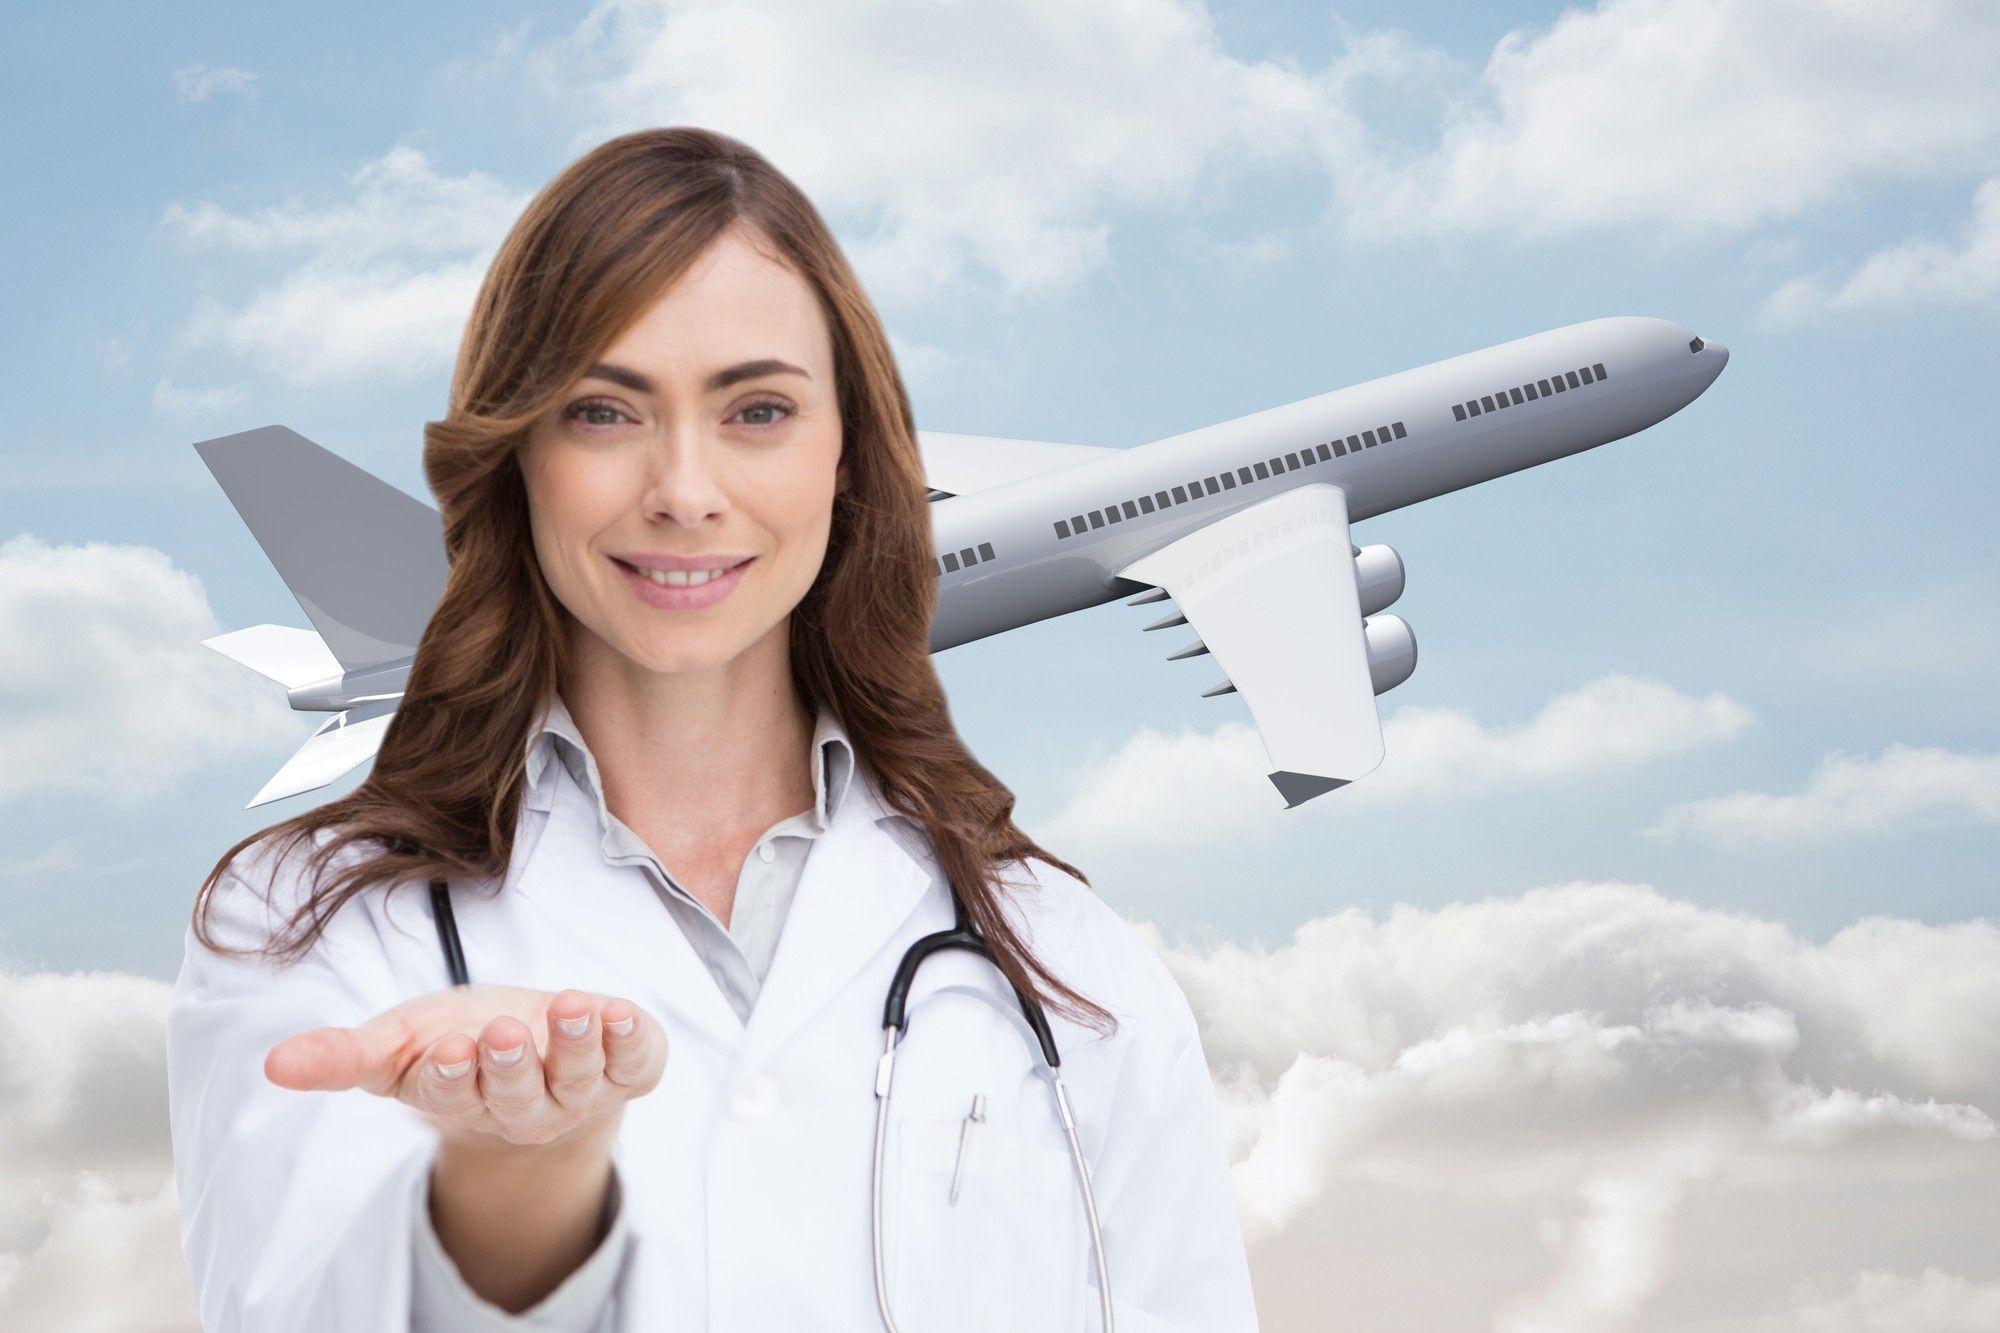 Travel nursing benefits may not meet California labor laws.